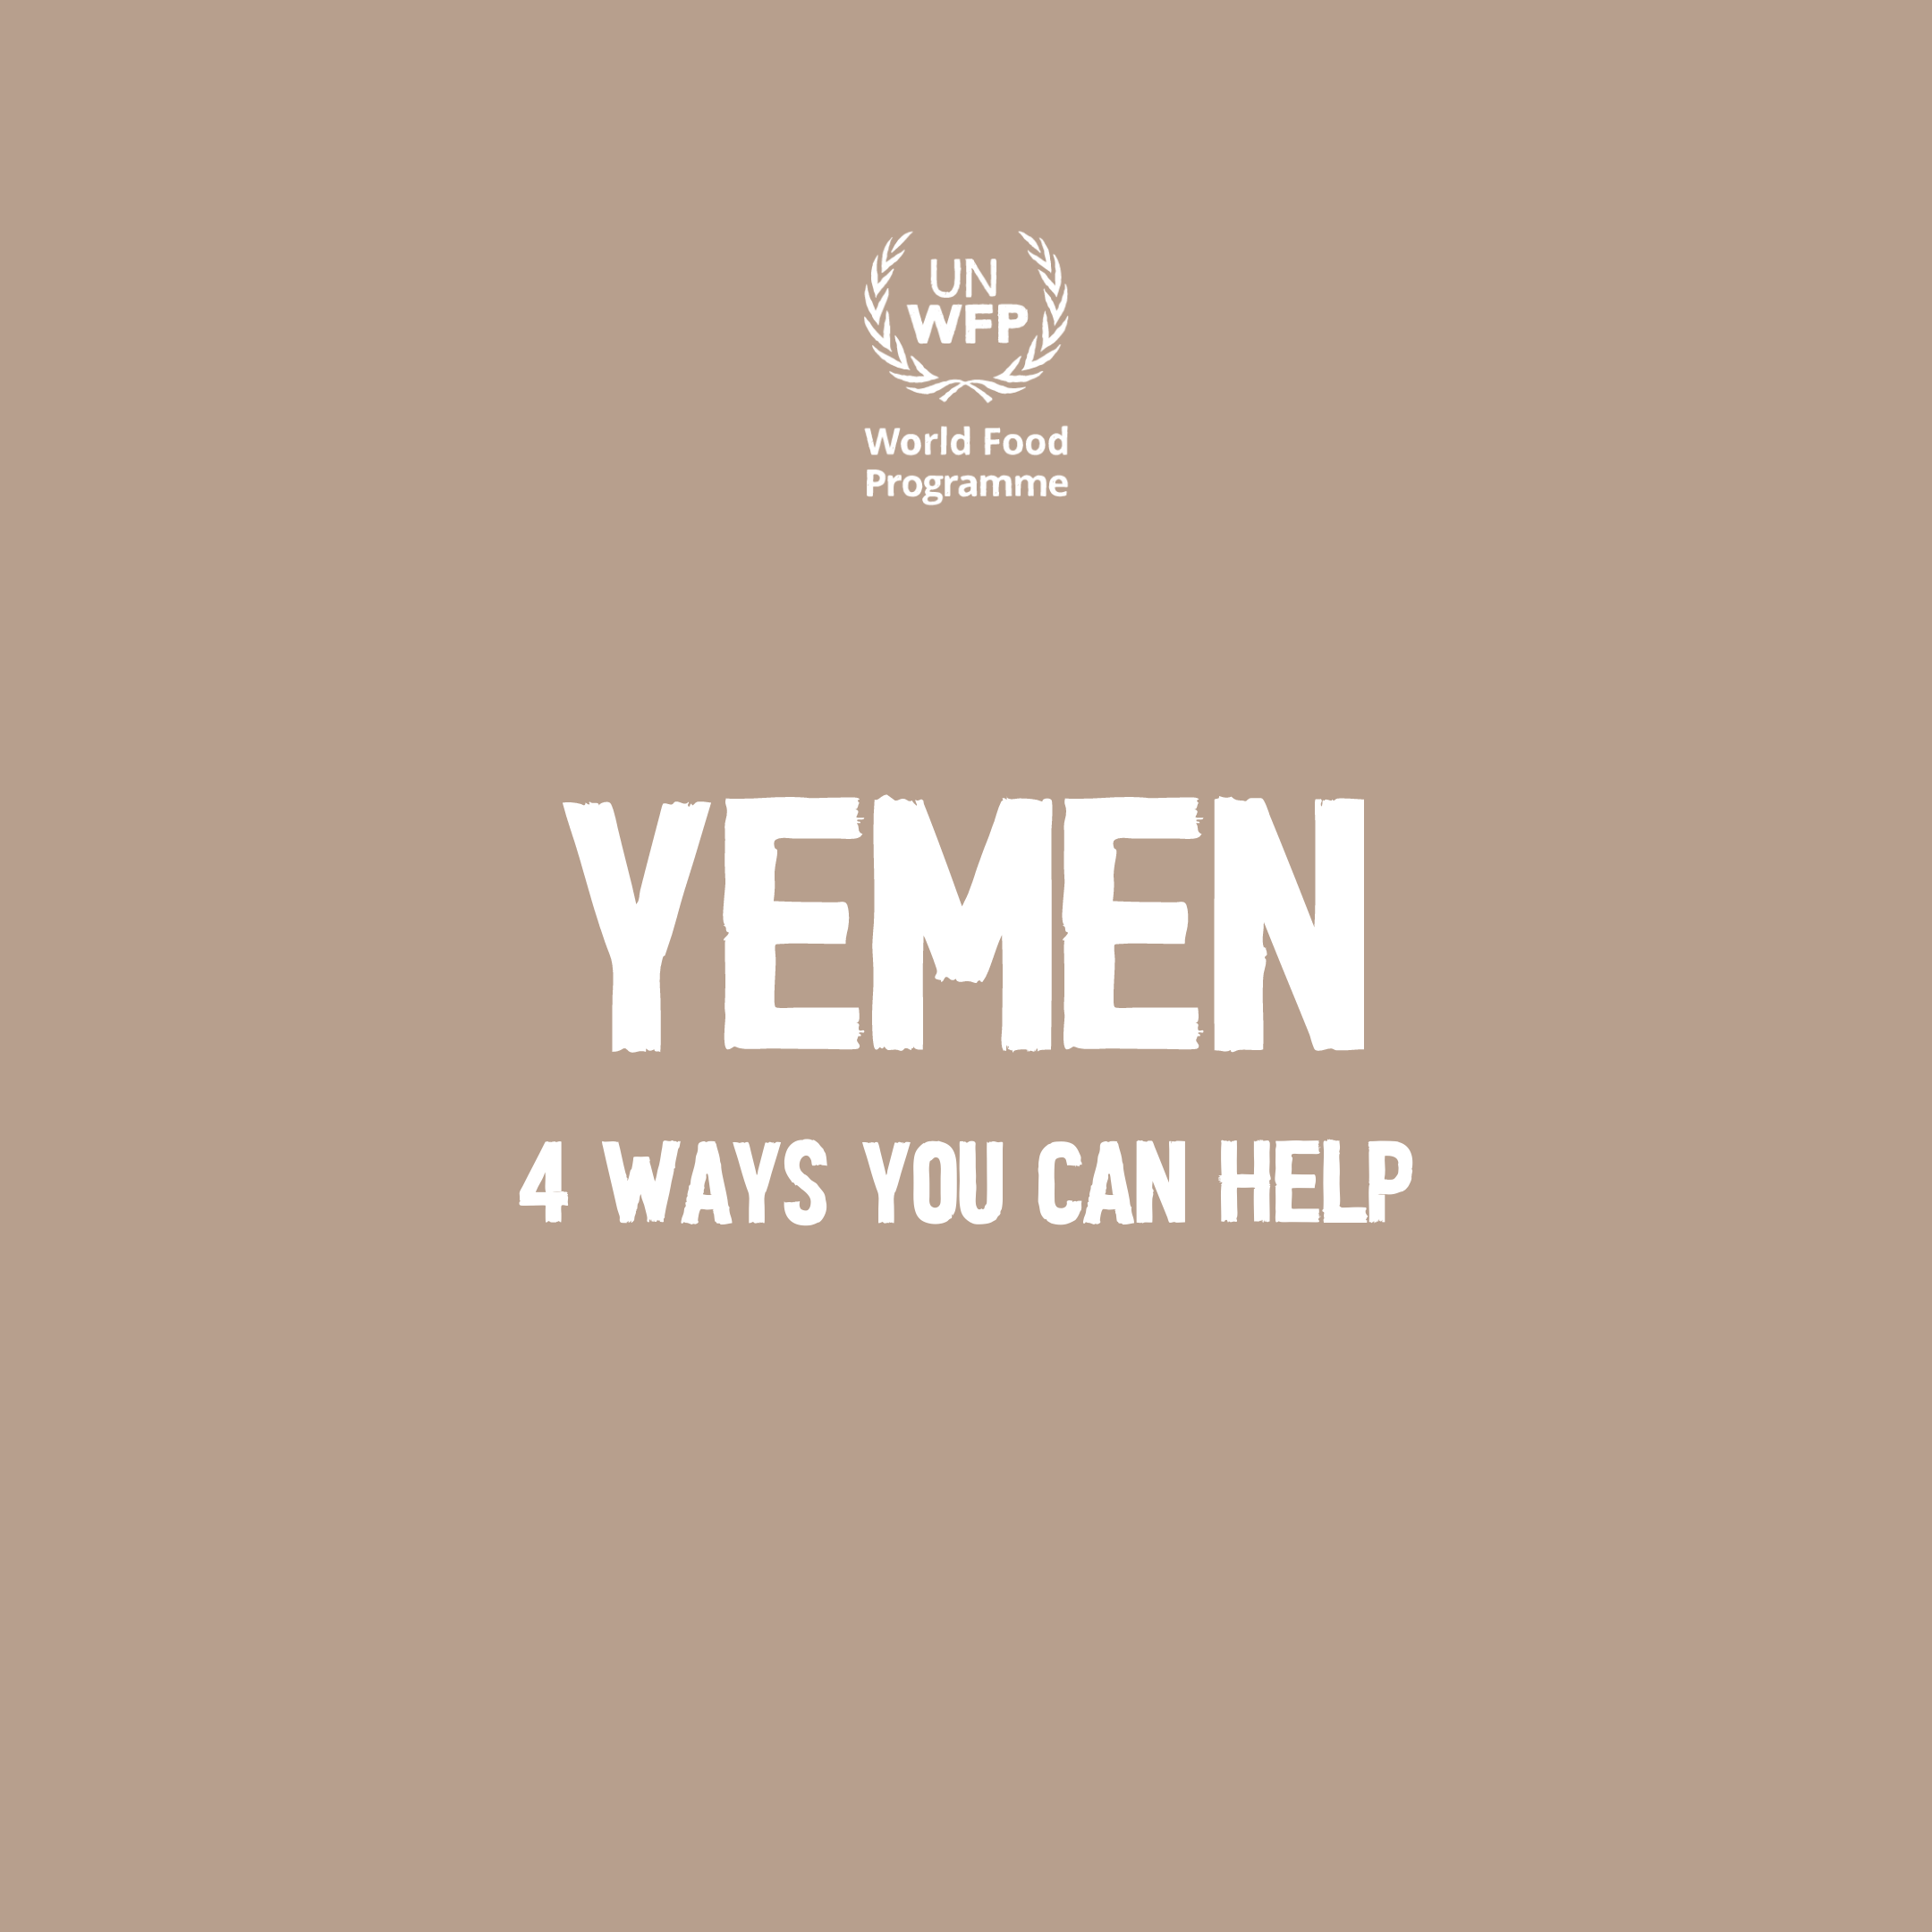 Yemen 4 ways you can help